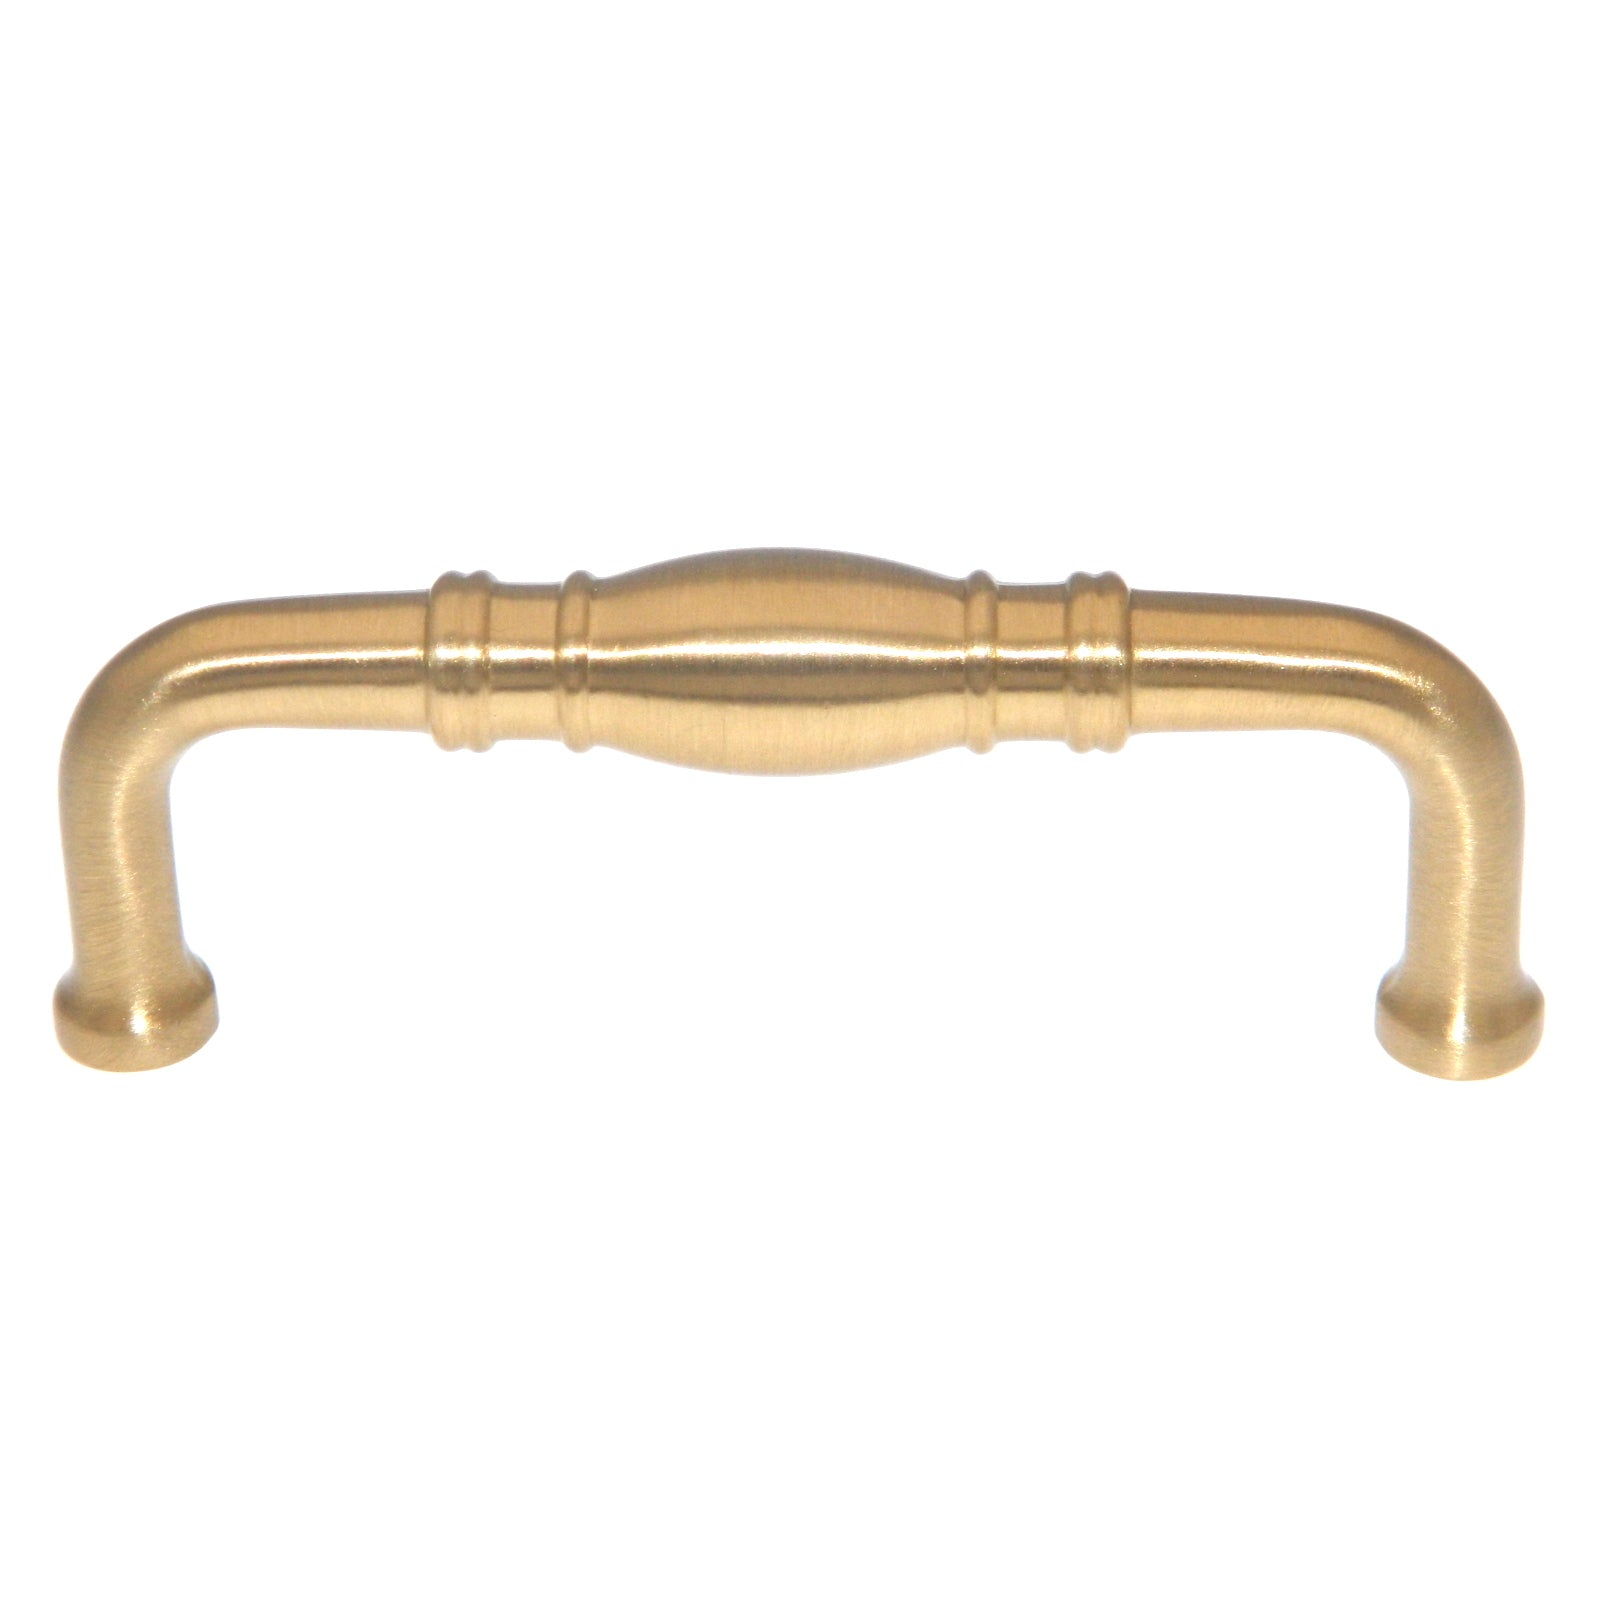 Keeler Power & Beauty Satin Brass 3"cc Furniture Cabinet Handle Pull Solid Brass K47-04